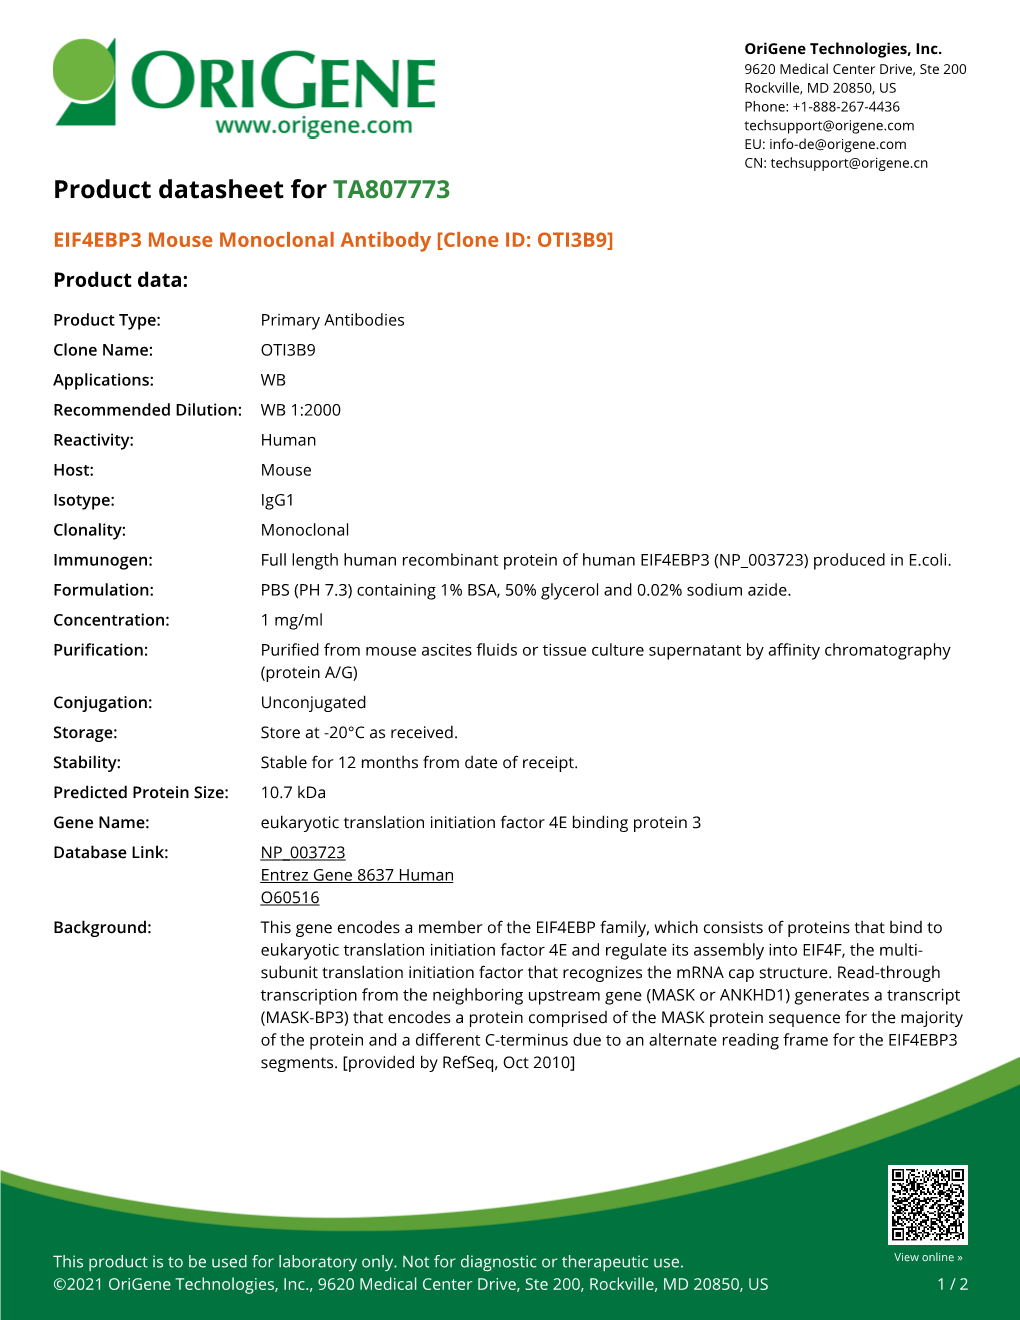 EIF4EBP3 Mouse Monoclonal Antibody [Clone ID: OTI3B9] – TA807773 | Origene